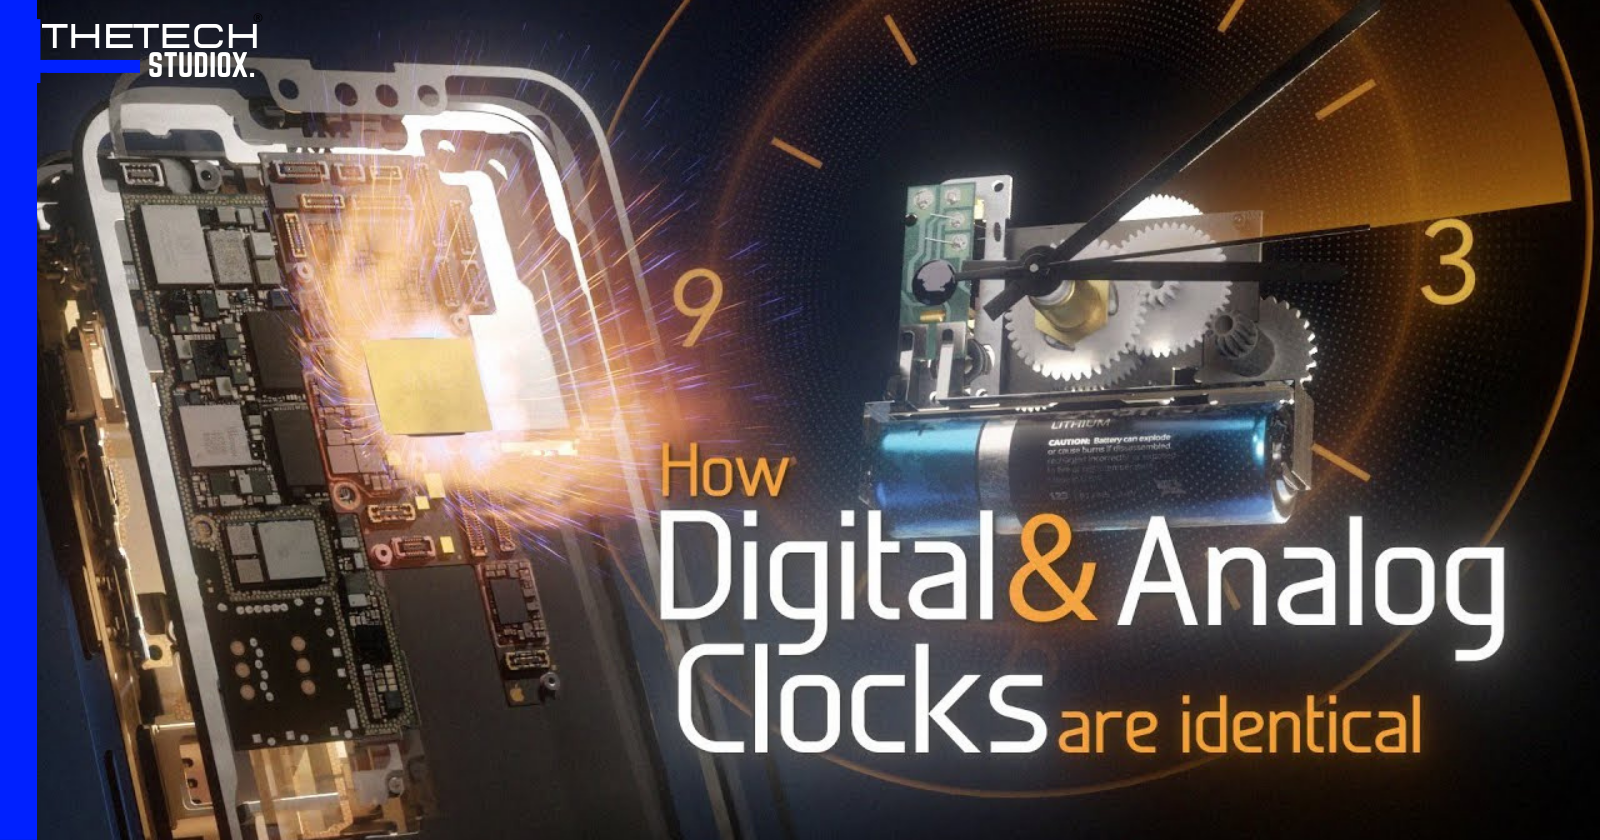 How do Digital and Analog Clocks Works?